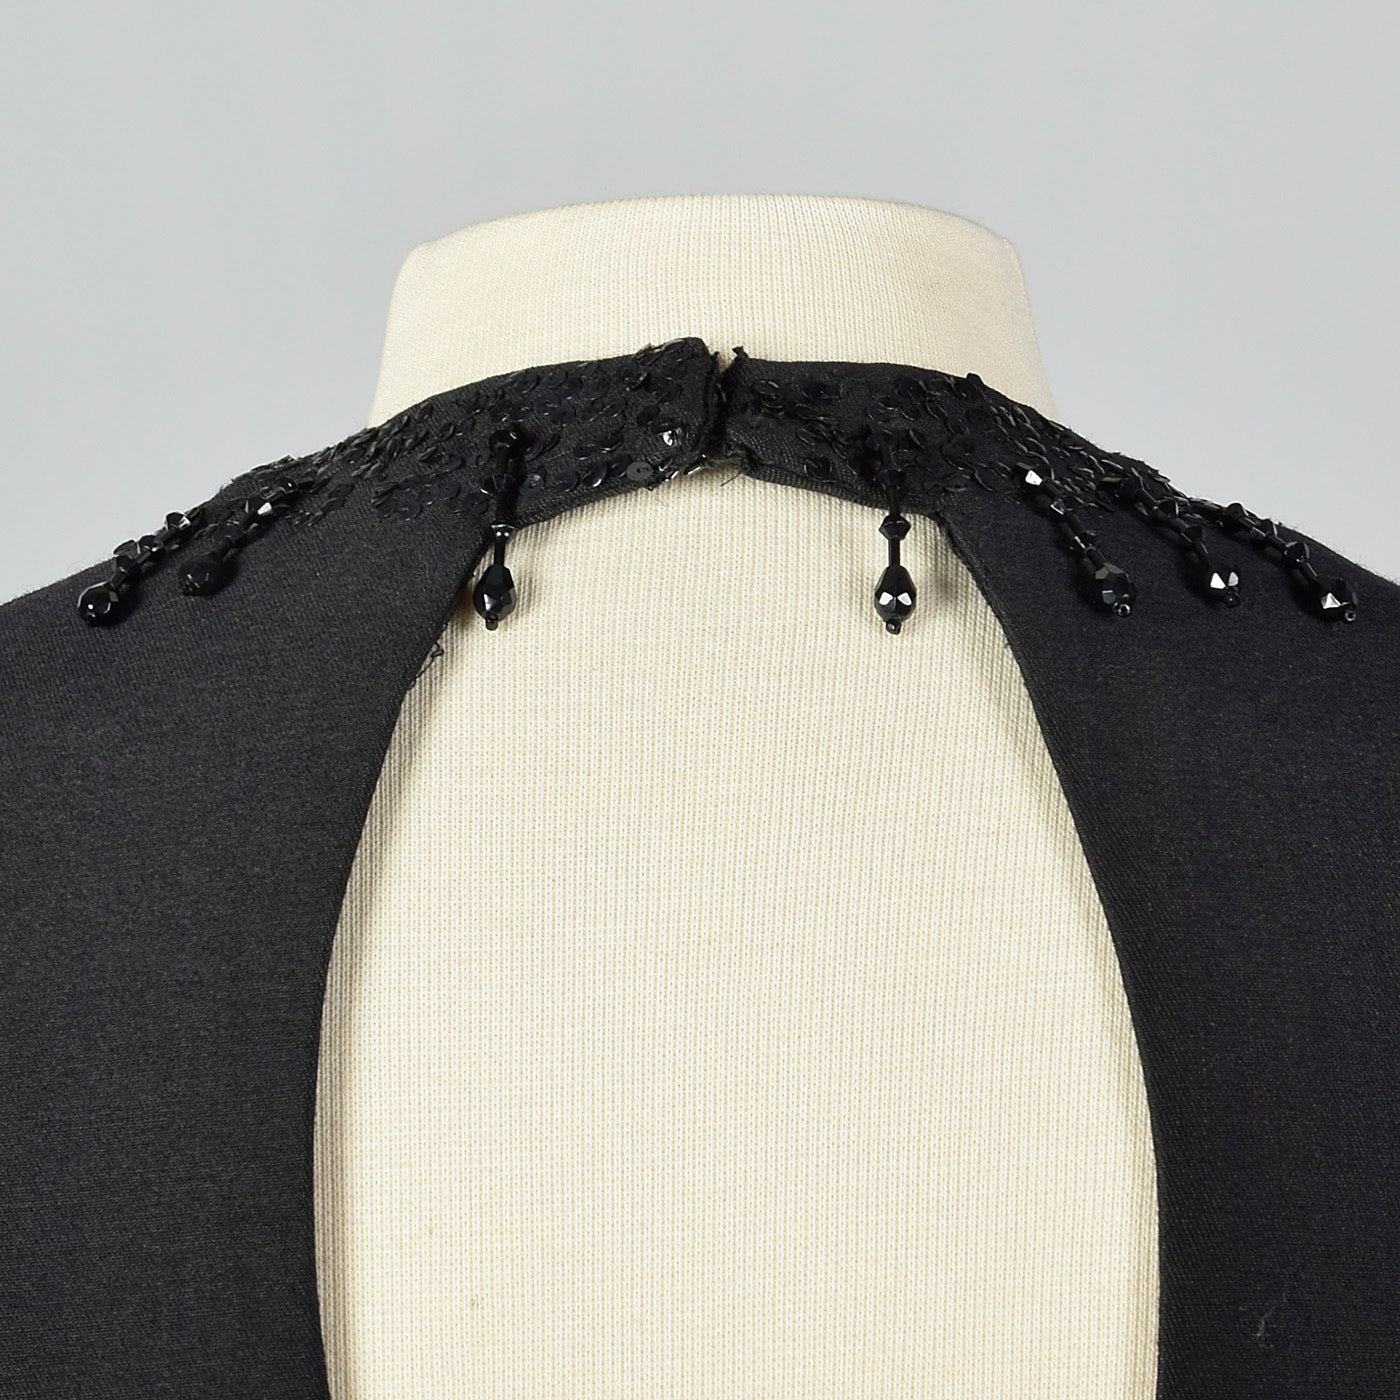 1960s Suzy Perette Black Dress with Keyhole Back